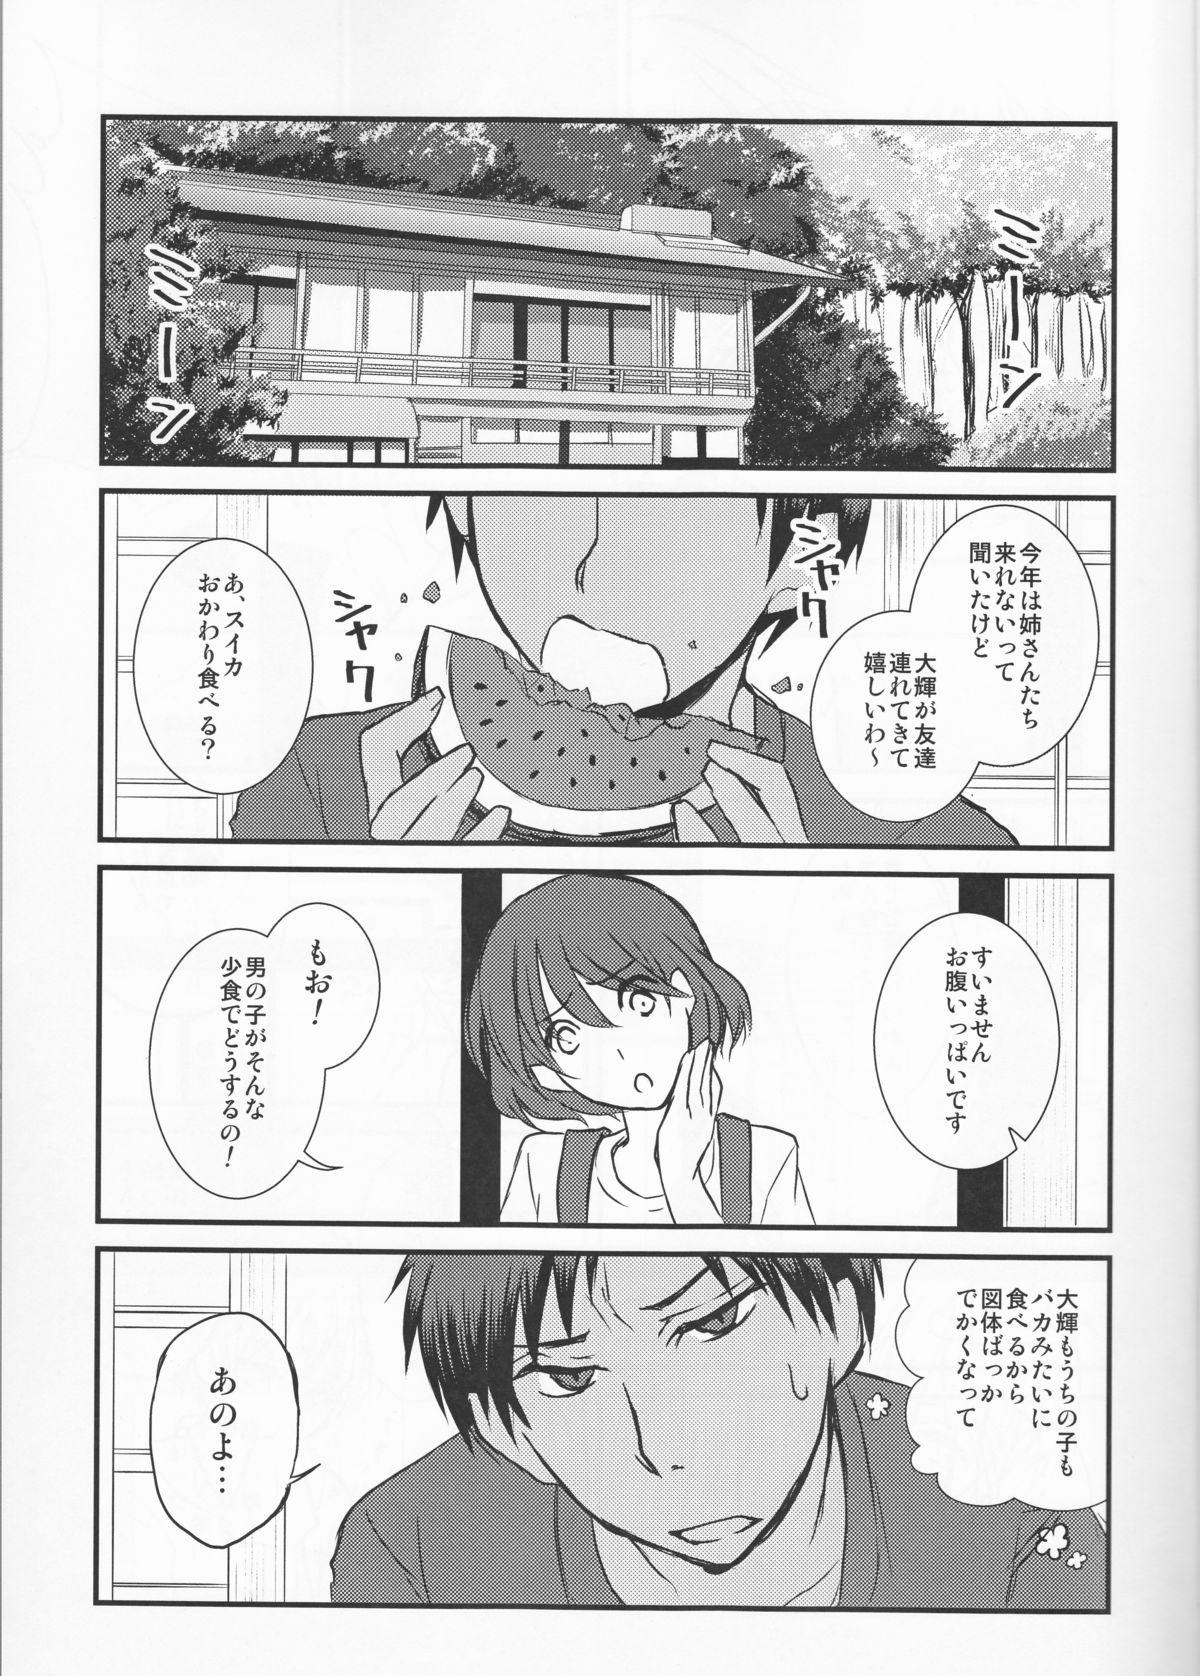 Hotwife Yesterday of his and her tomorrow - Kuroko no basuke Whores - Page 3